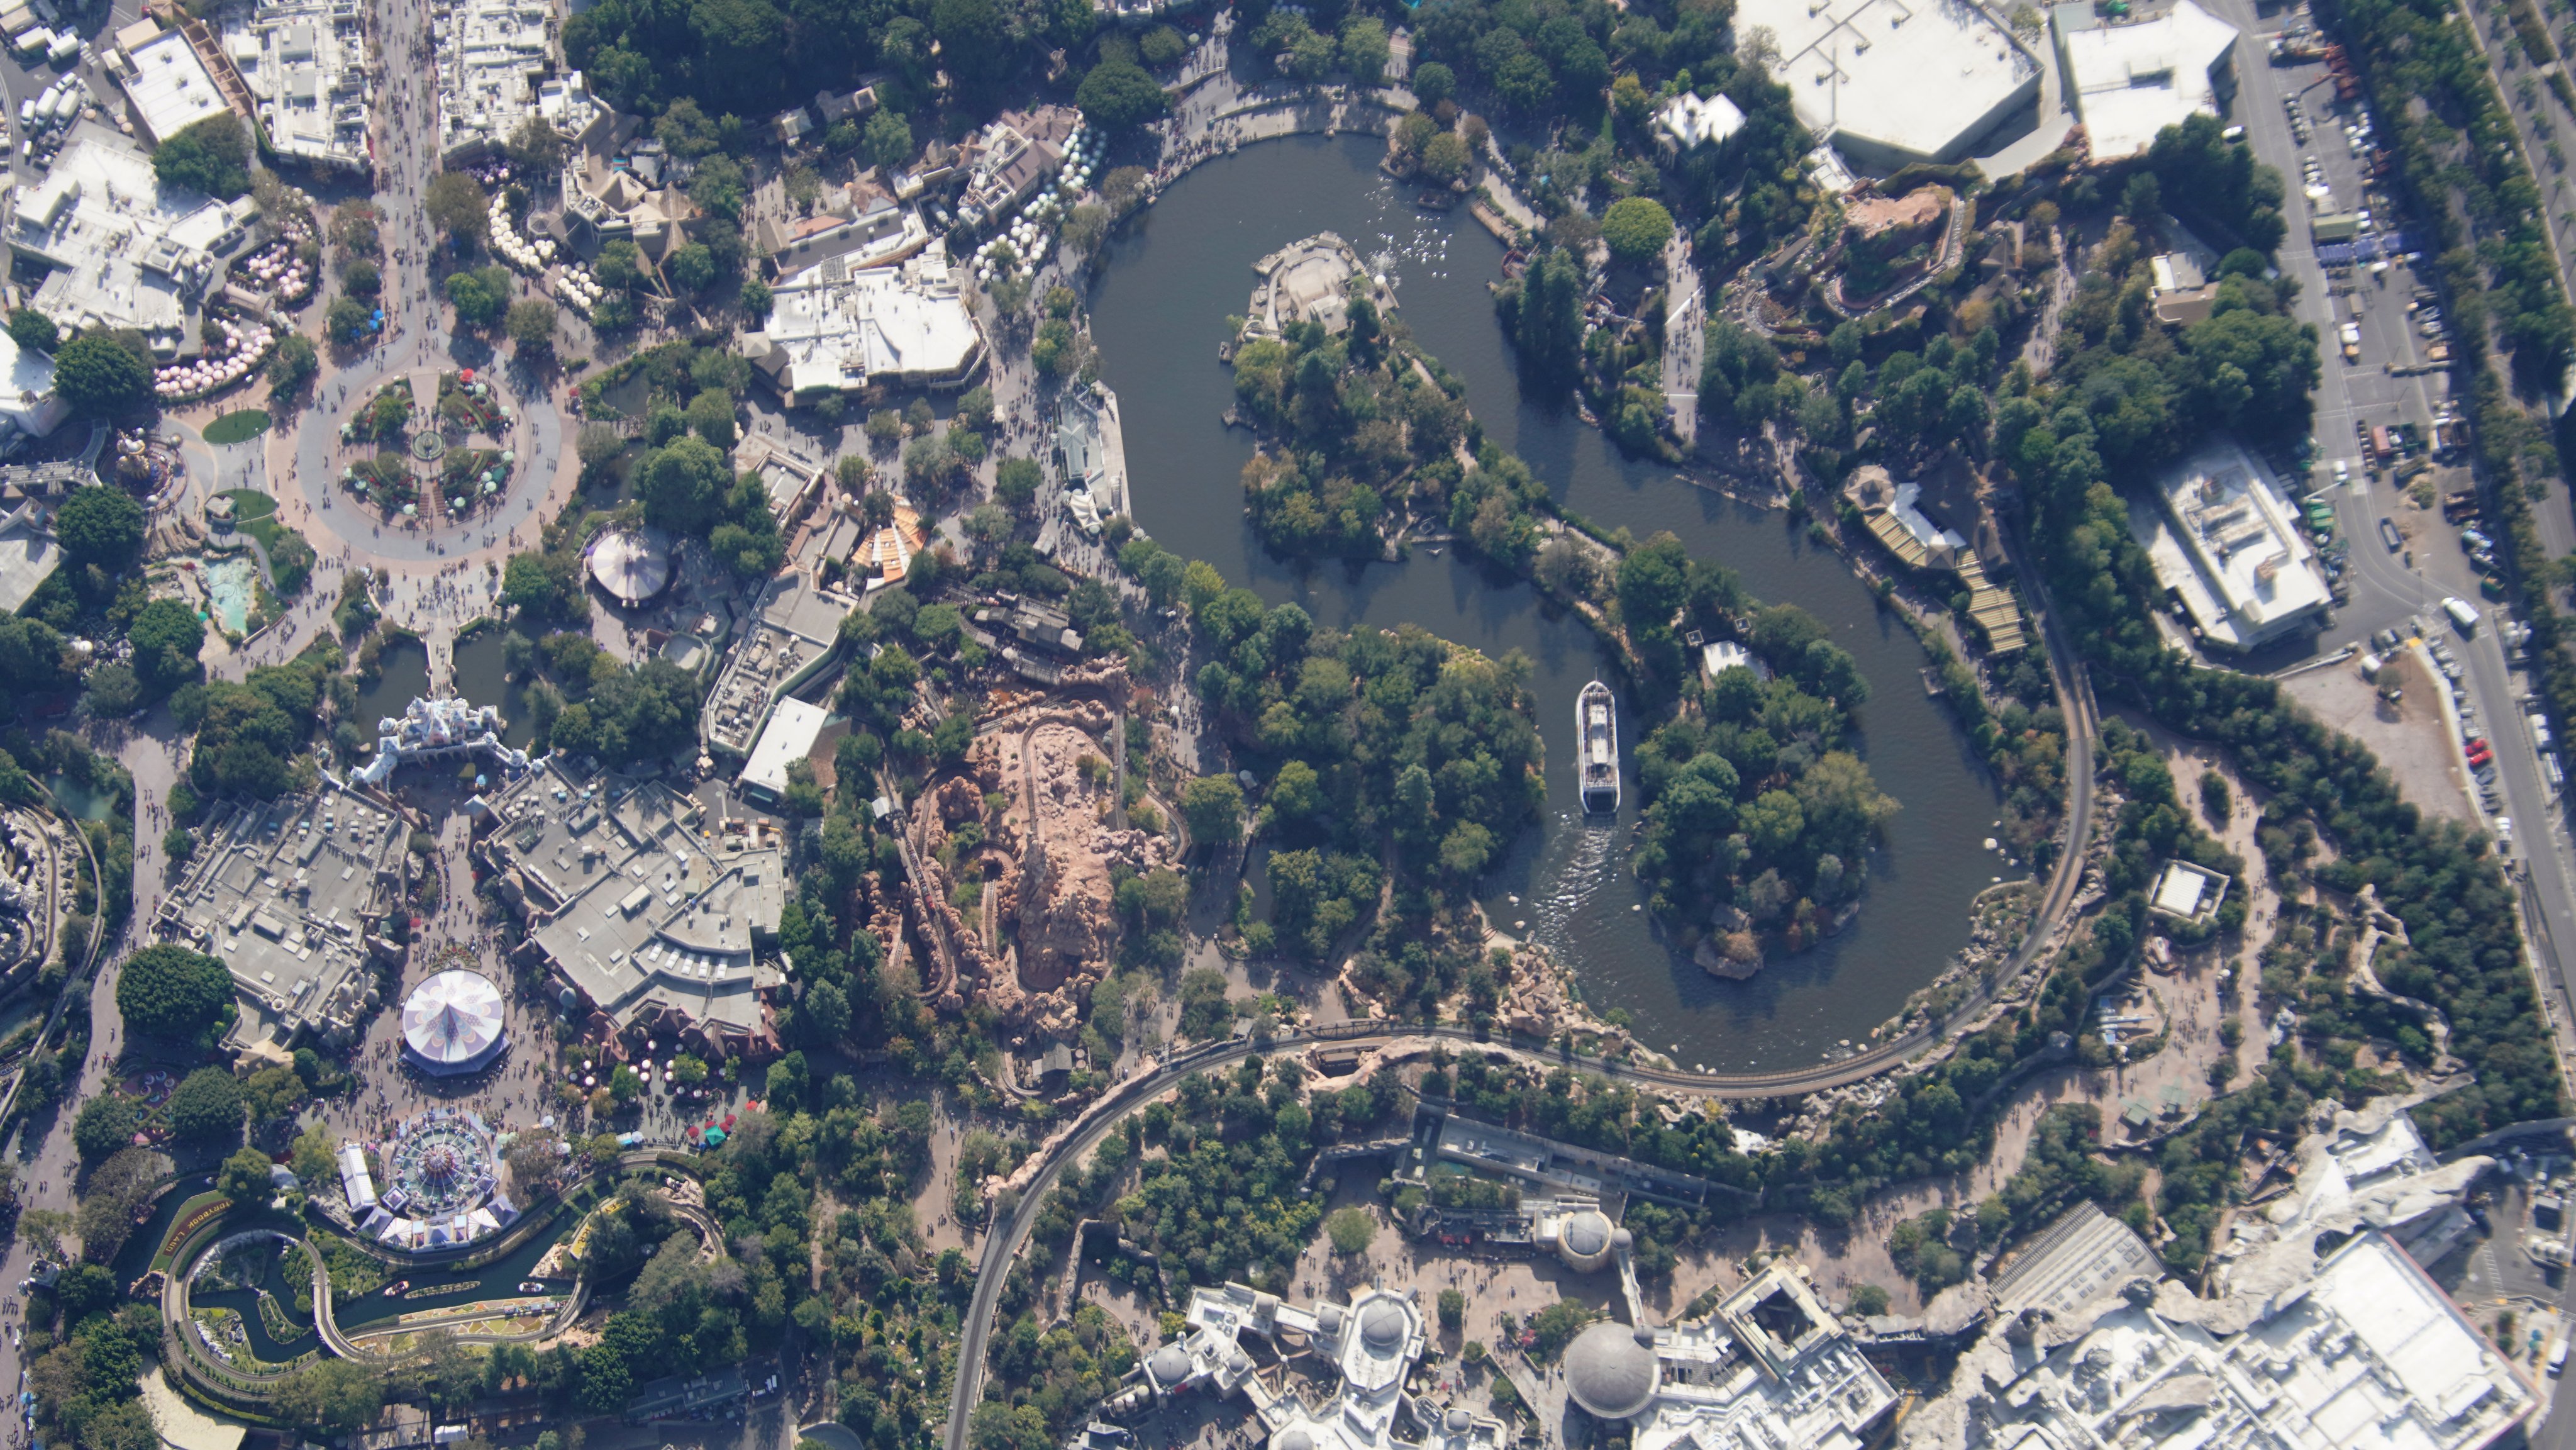 Disneyland Resort vu du ciel, des images sublimes! EJaO01XU4AIwsCJ?format=jpg&name=4096x4096